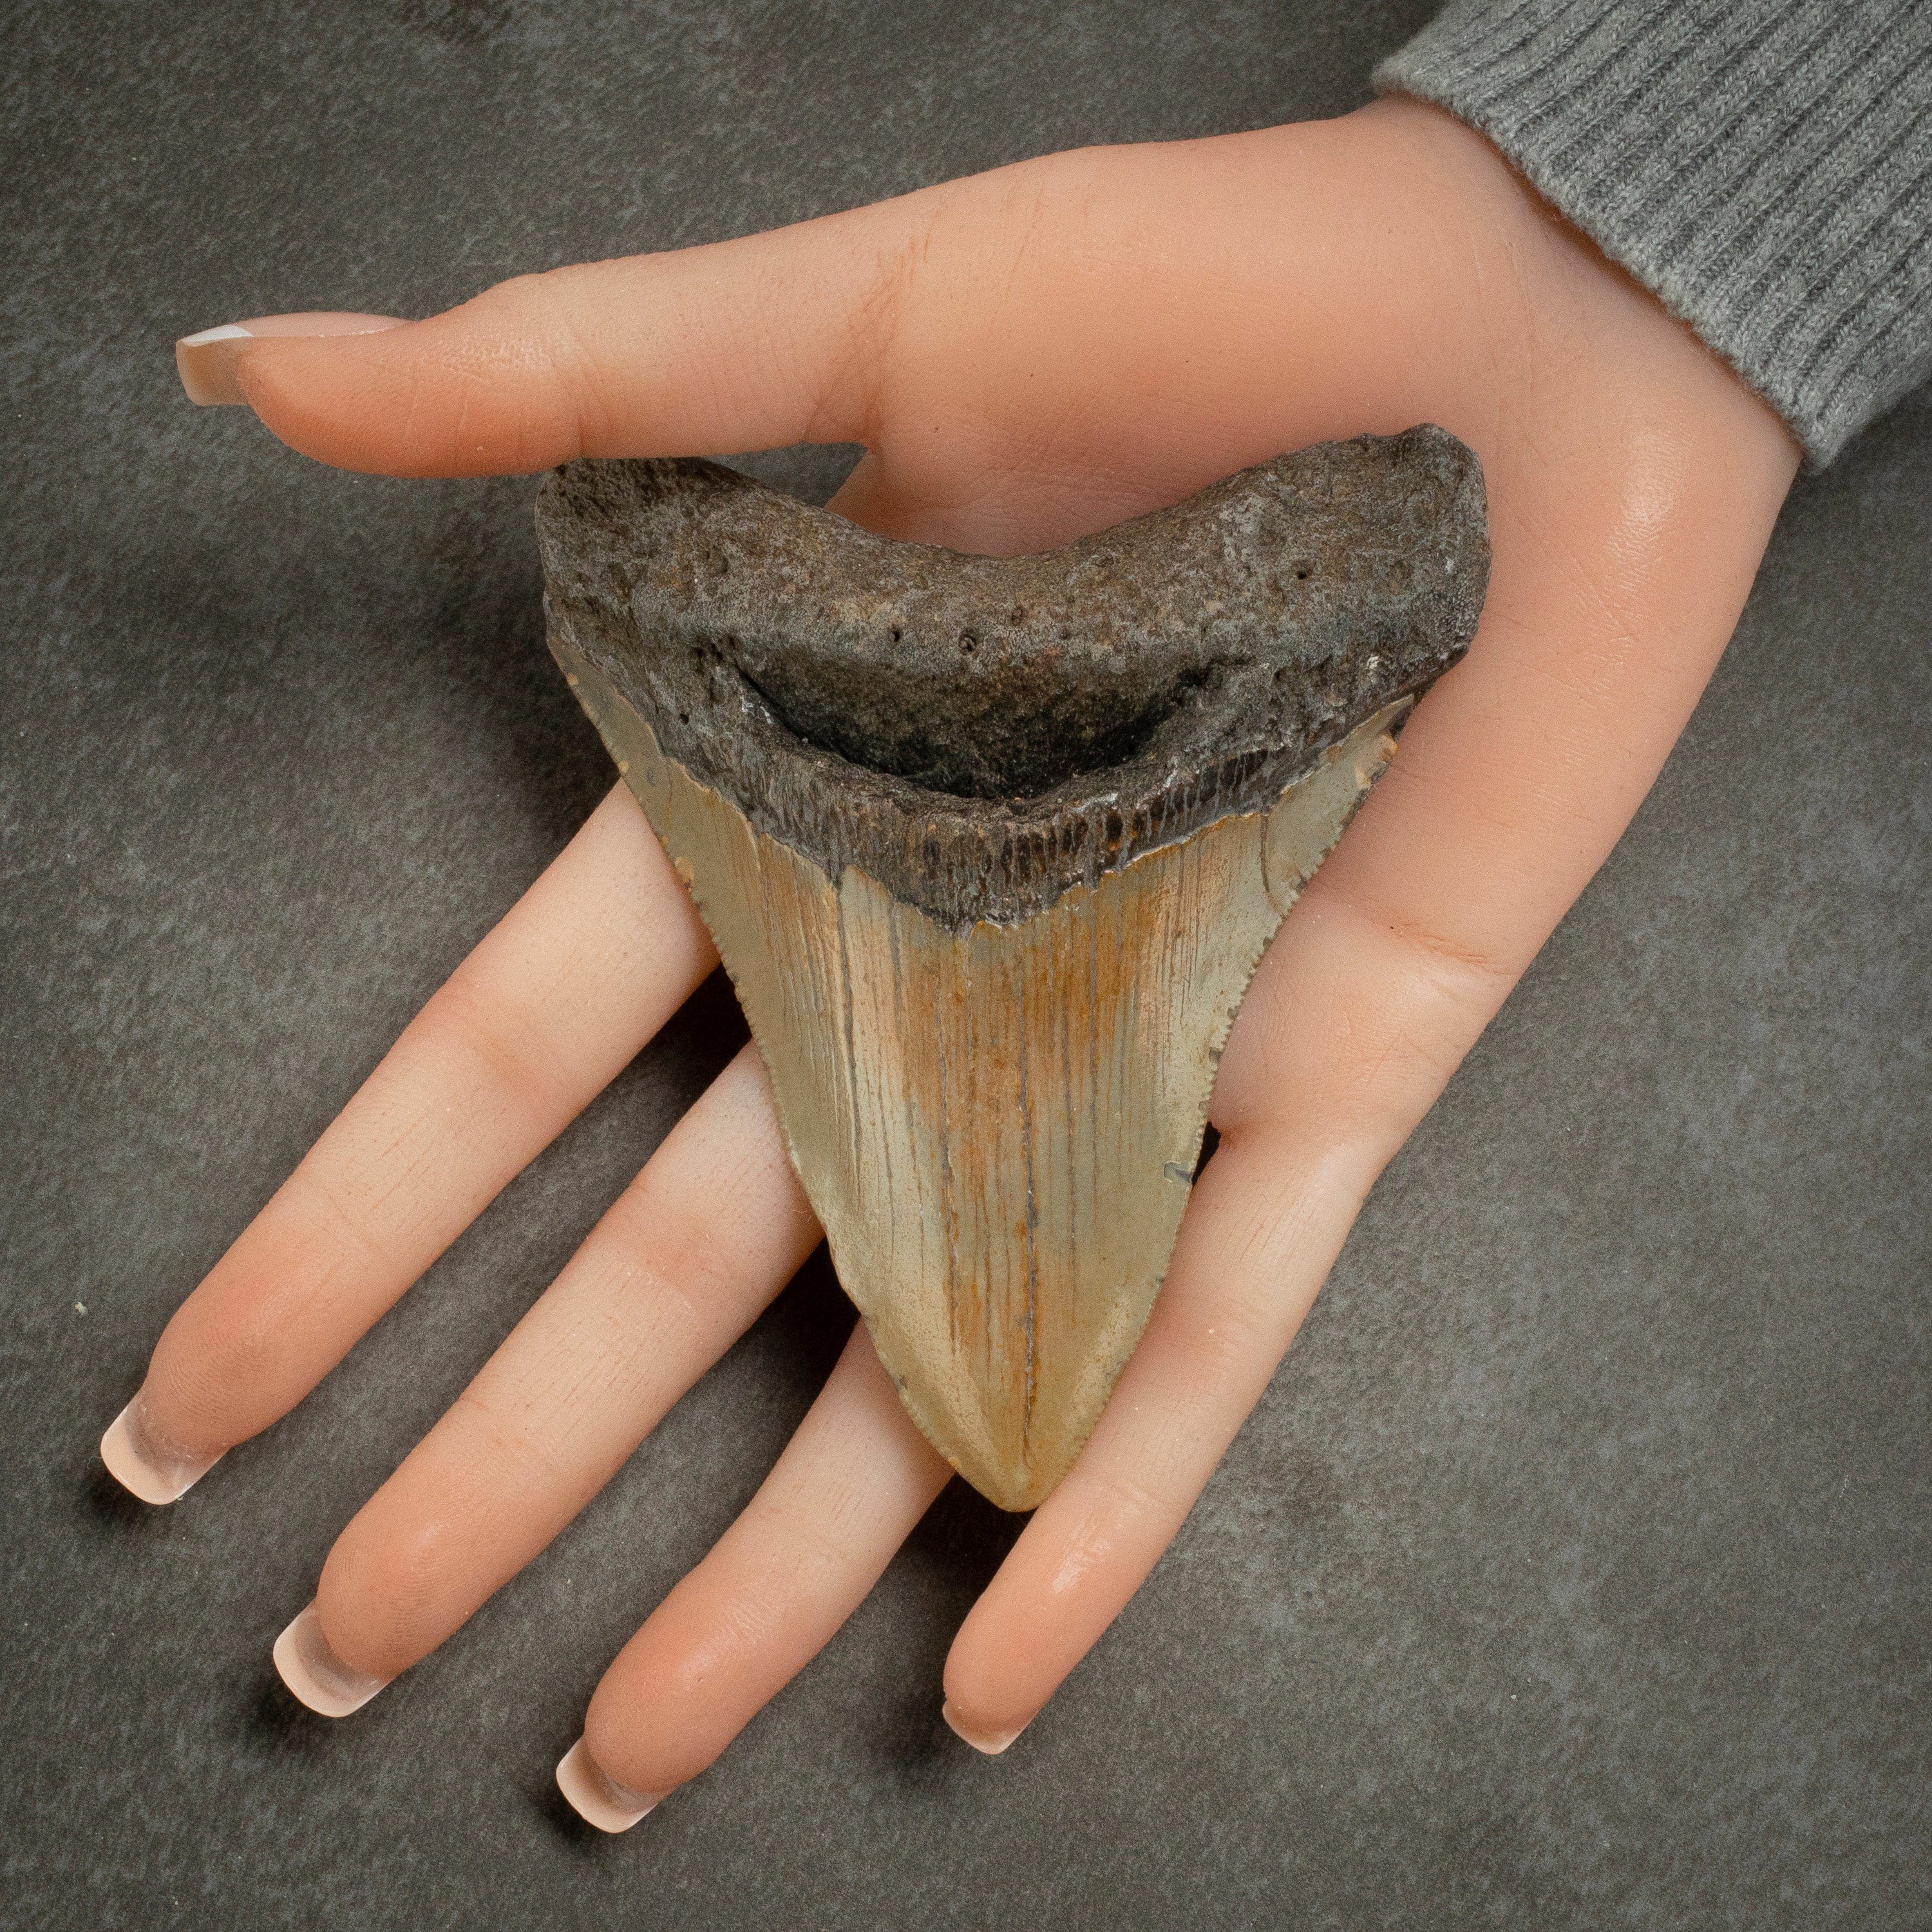 Kalifano Megalodon Teeth Megalodon Tooth from South Carolina - 4.1" ST1600.035